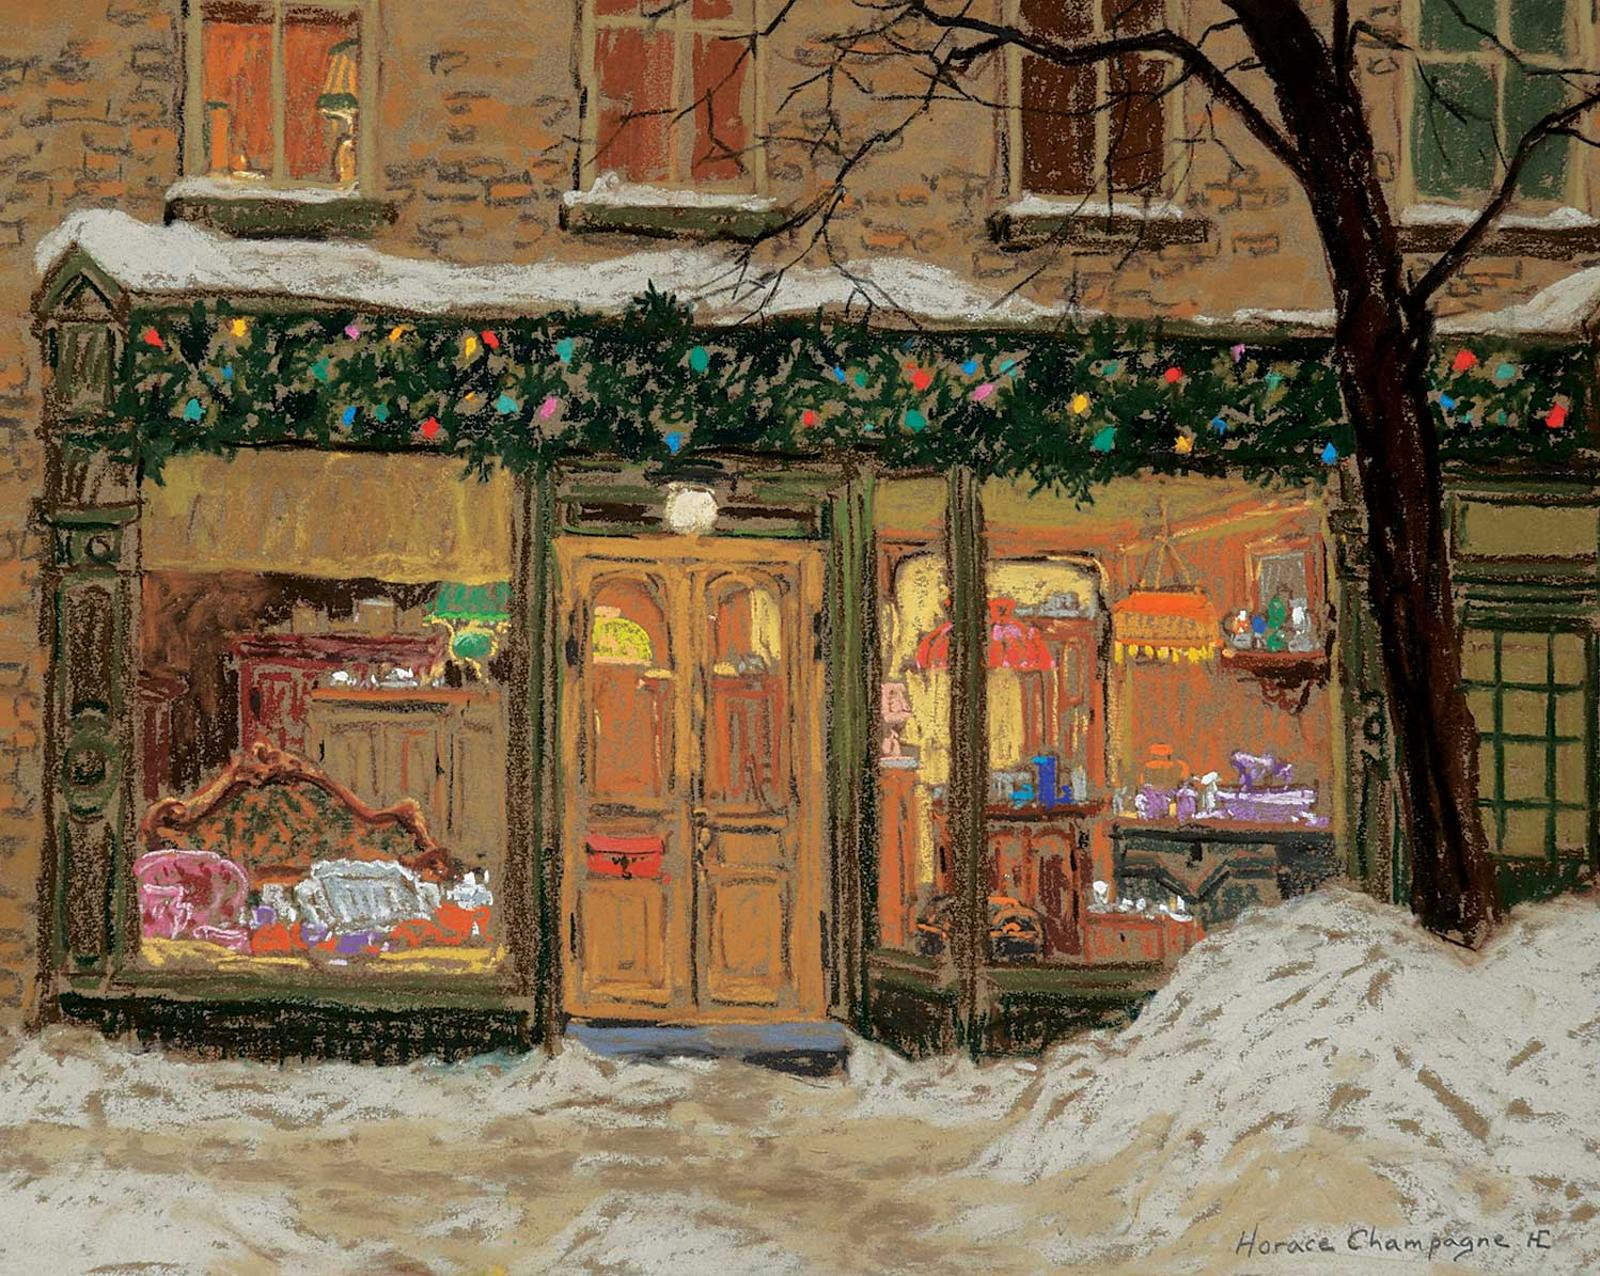 Horace Champagne (1937) - The Antique Store, Rue St. Paul, Quebec City